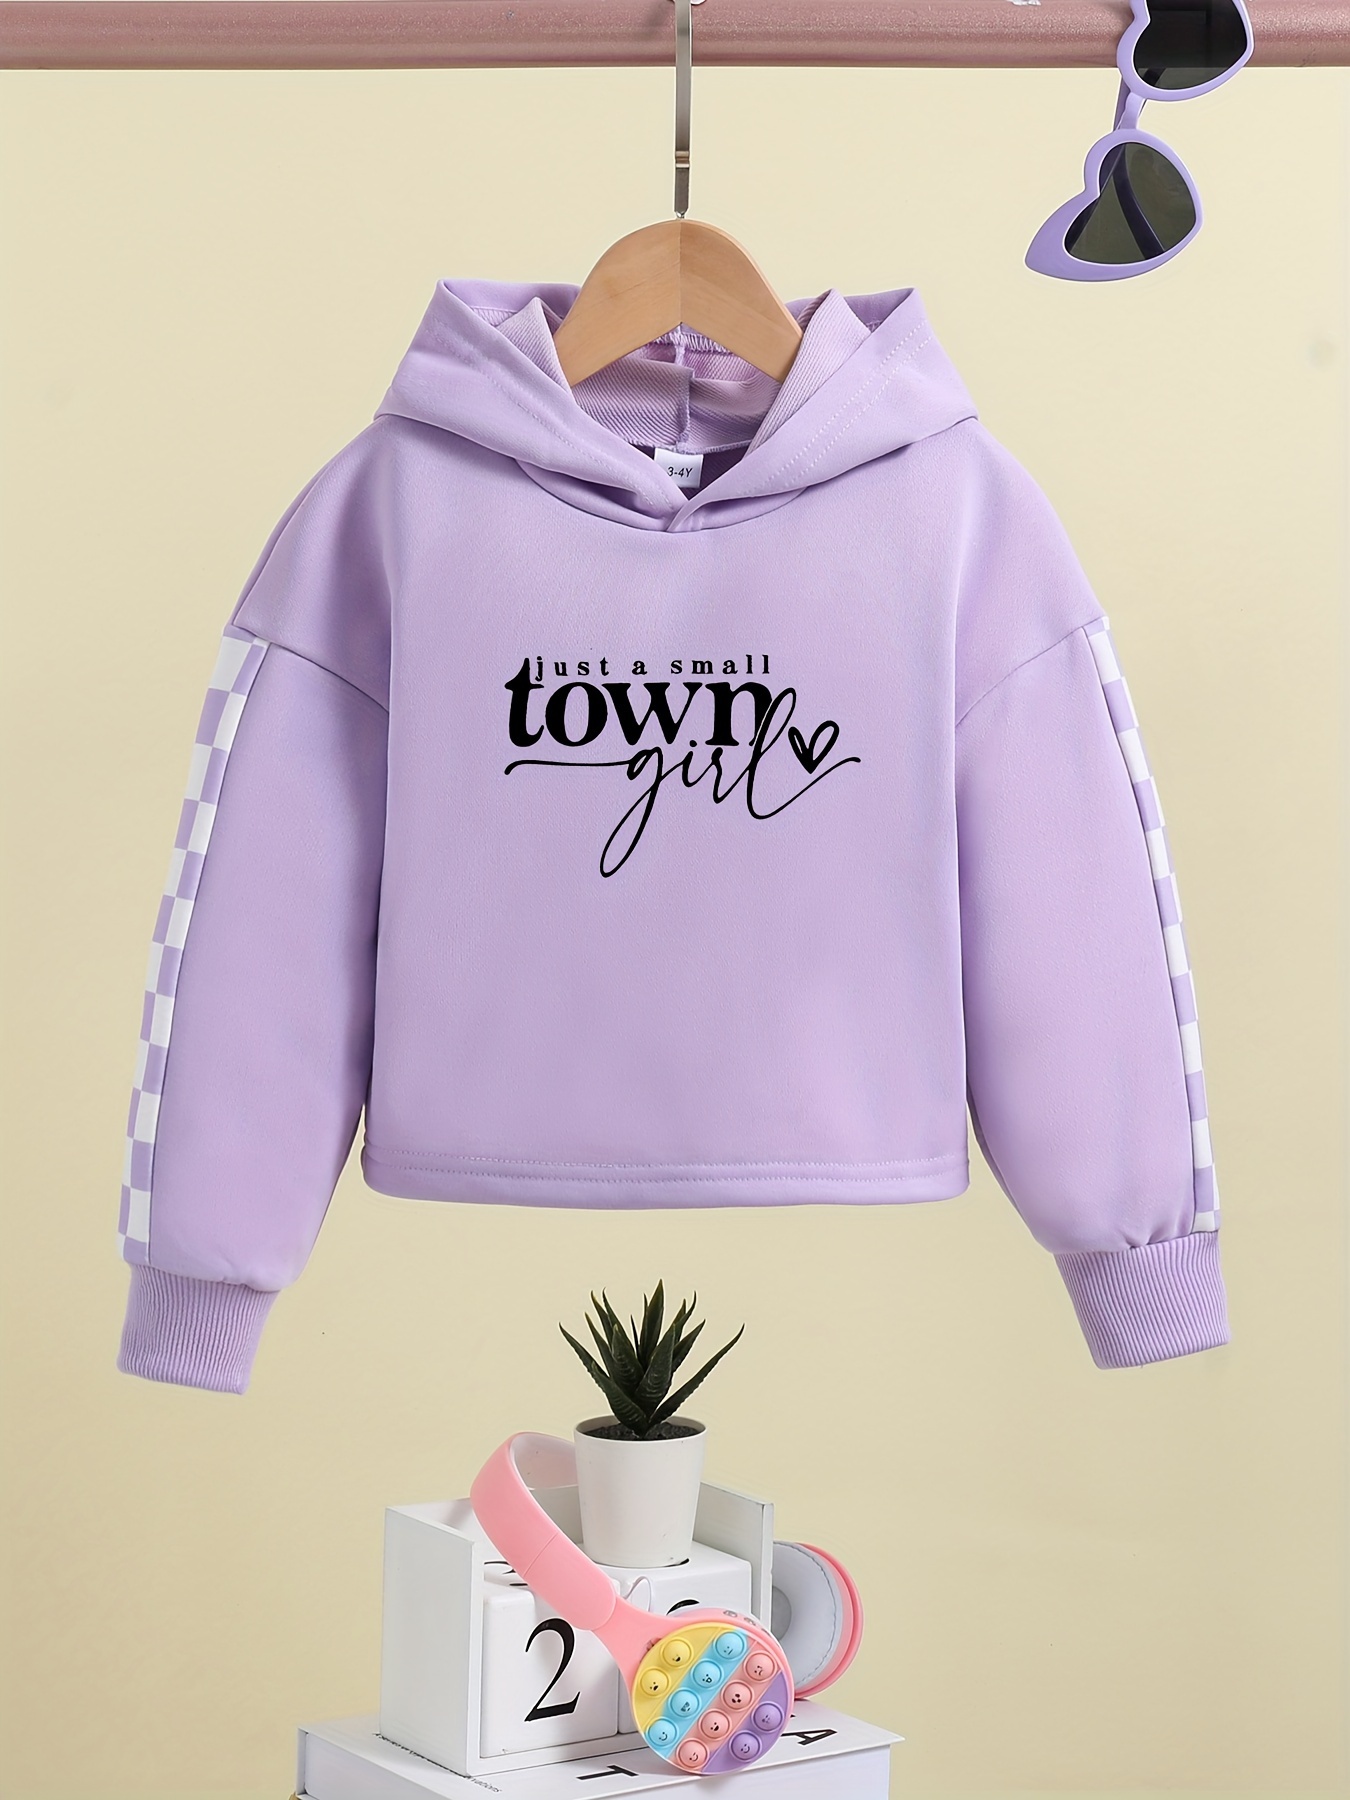 Small Town Girl Sweatshirt - Mauve